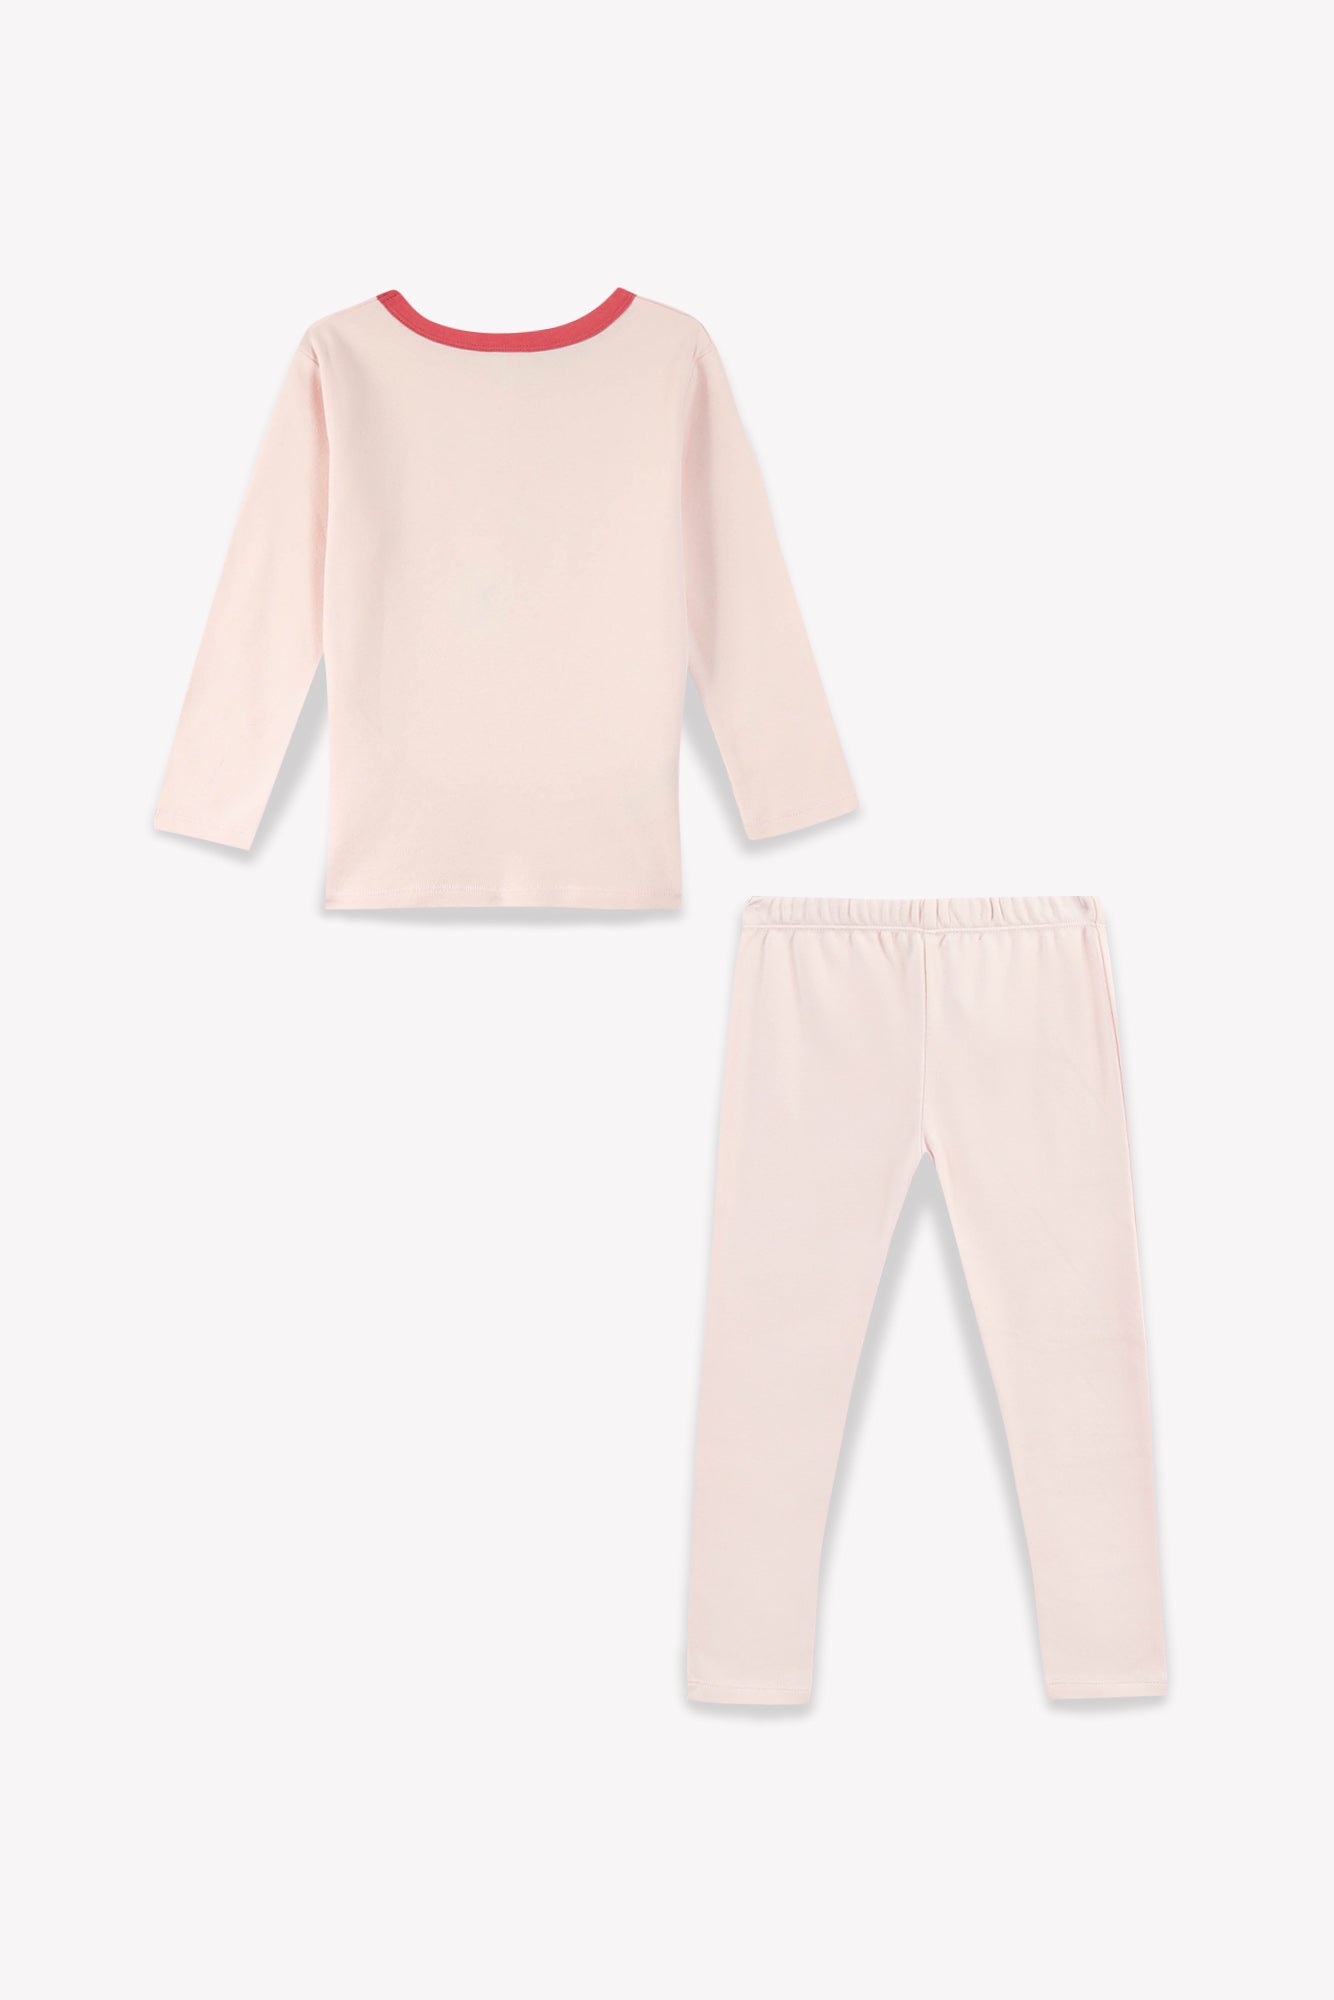 Pajamas - Christmas Girl Santa Staff Eau de Pink